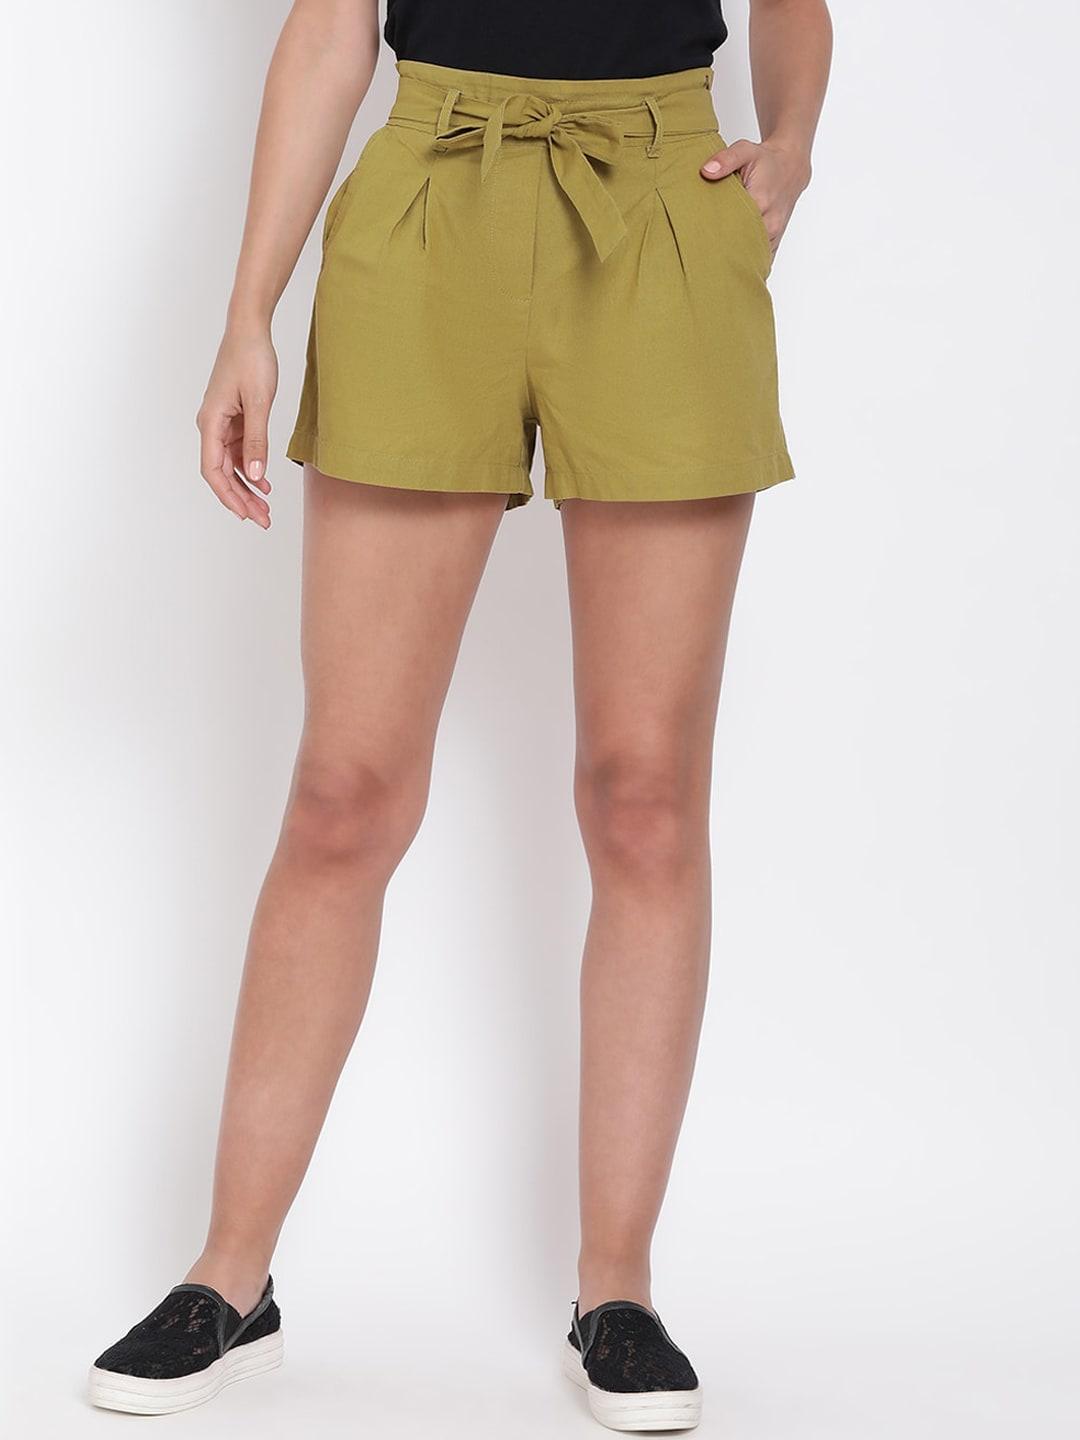 oxolloxo-women-olive-green-solid-regular-fit-regular-shorts